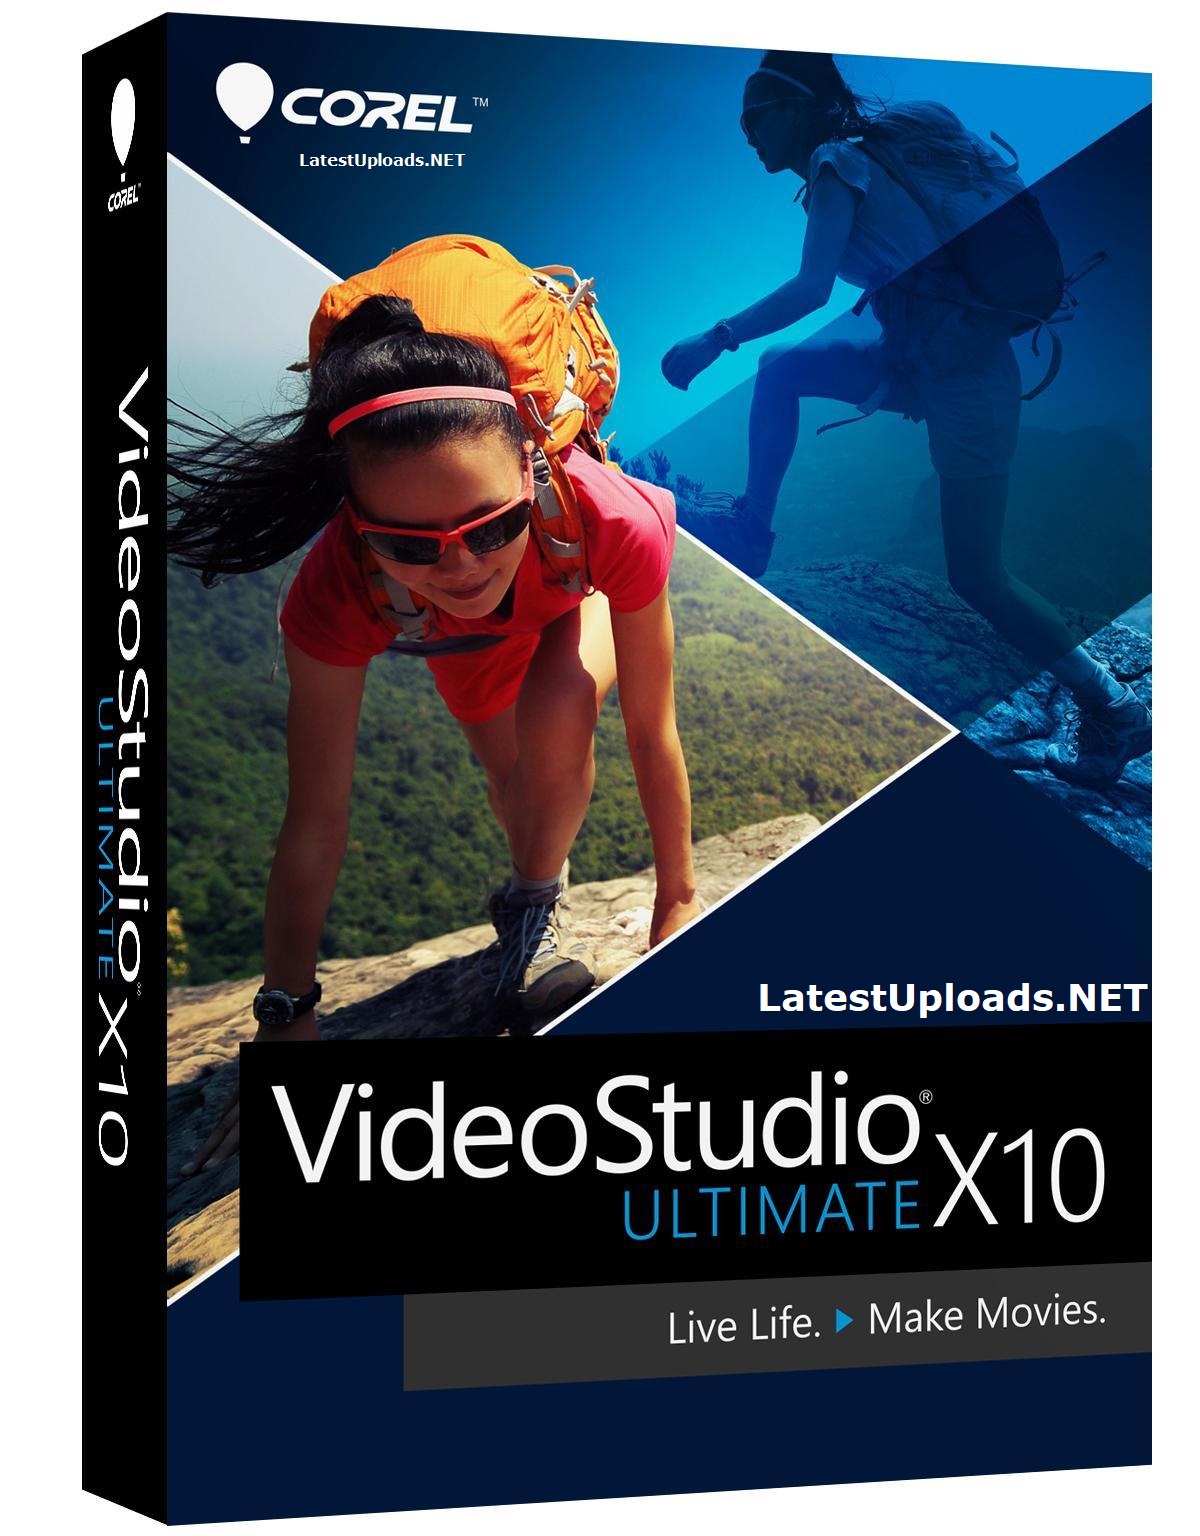 Corel VideoStudio Ultimate X10 Free Download Full Version